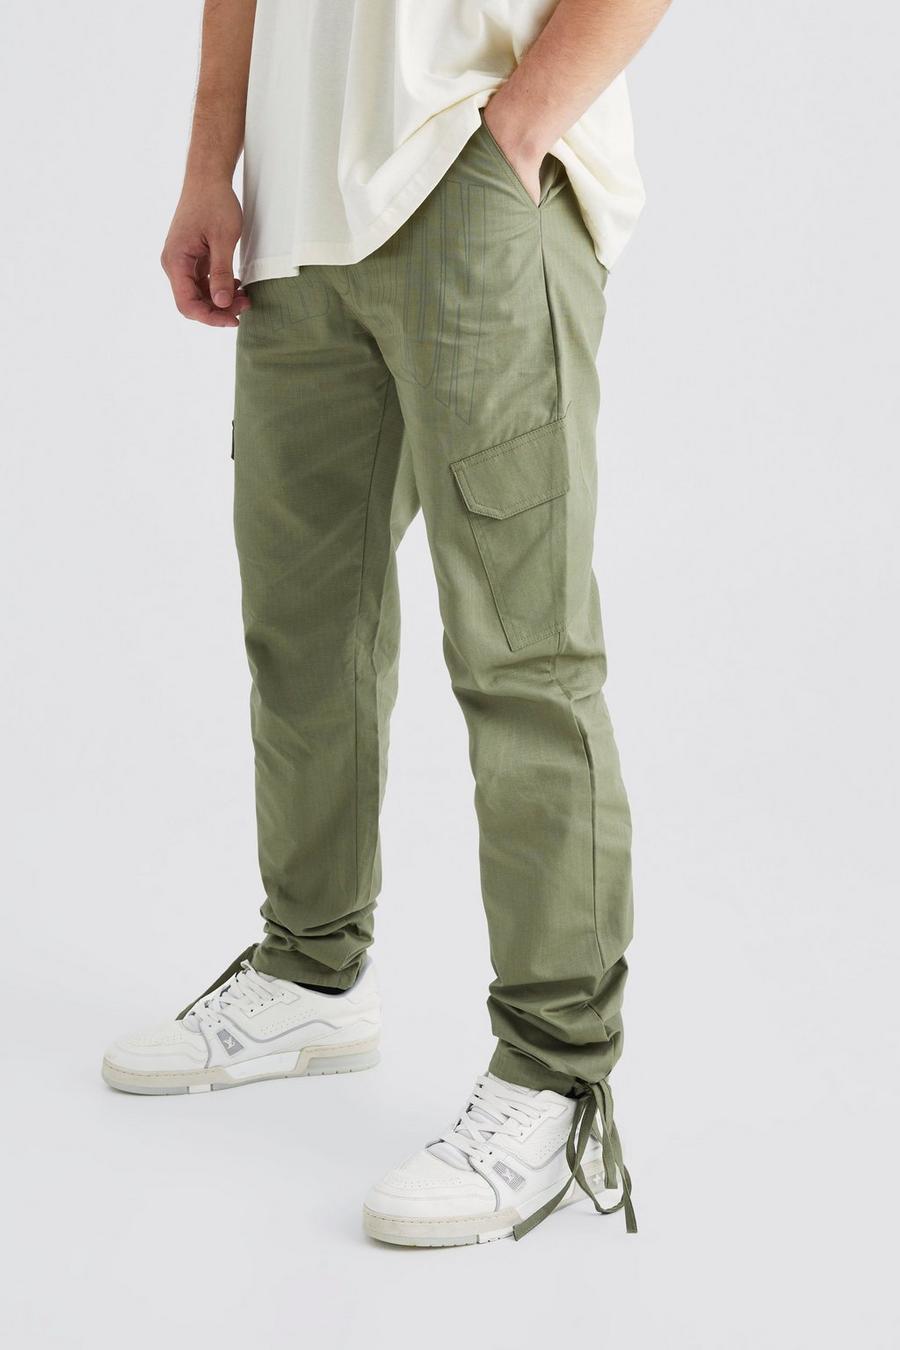 Pantaloni Cargo Tall Slim Fit in nylon ripstop tono su tono, Khaki kaki